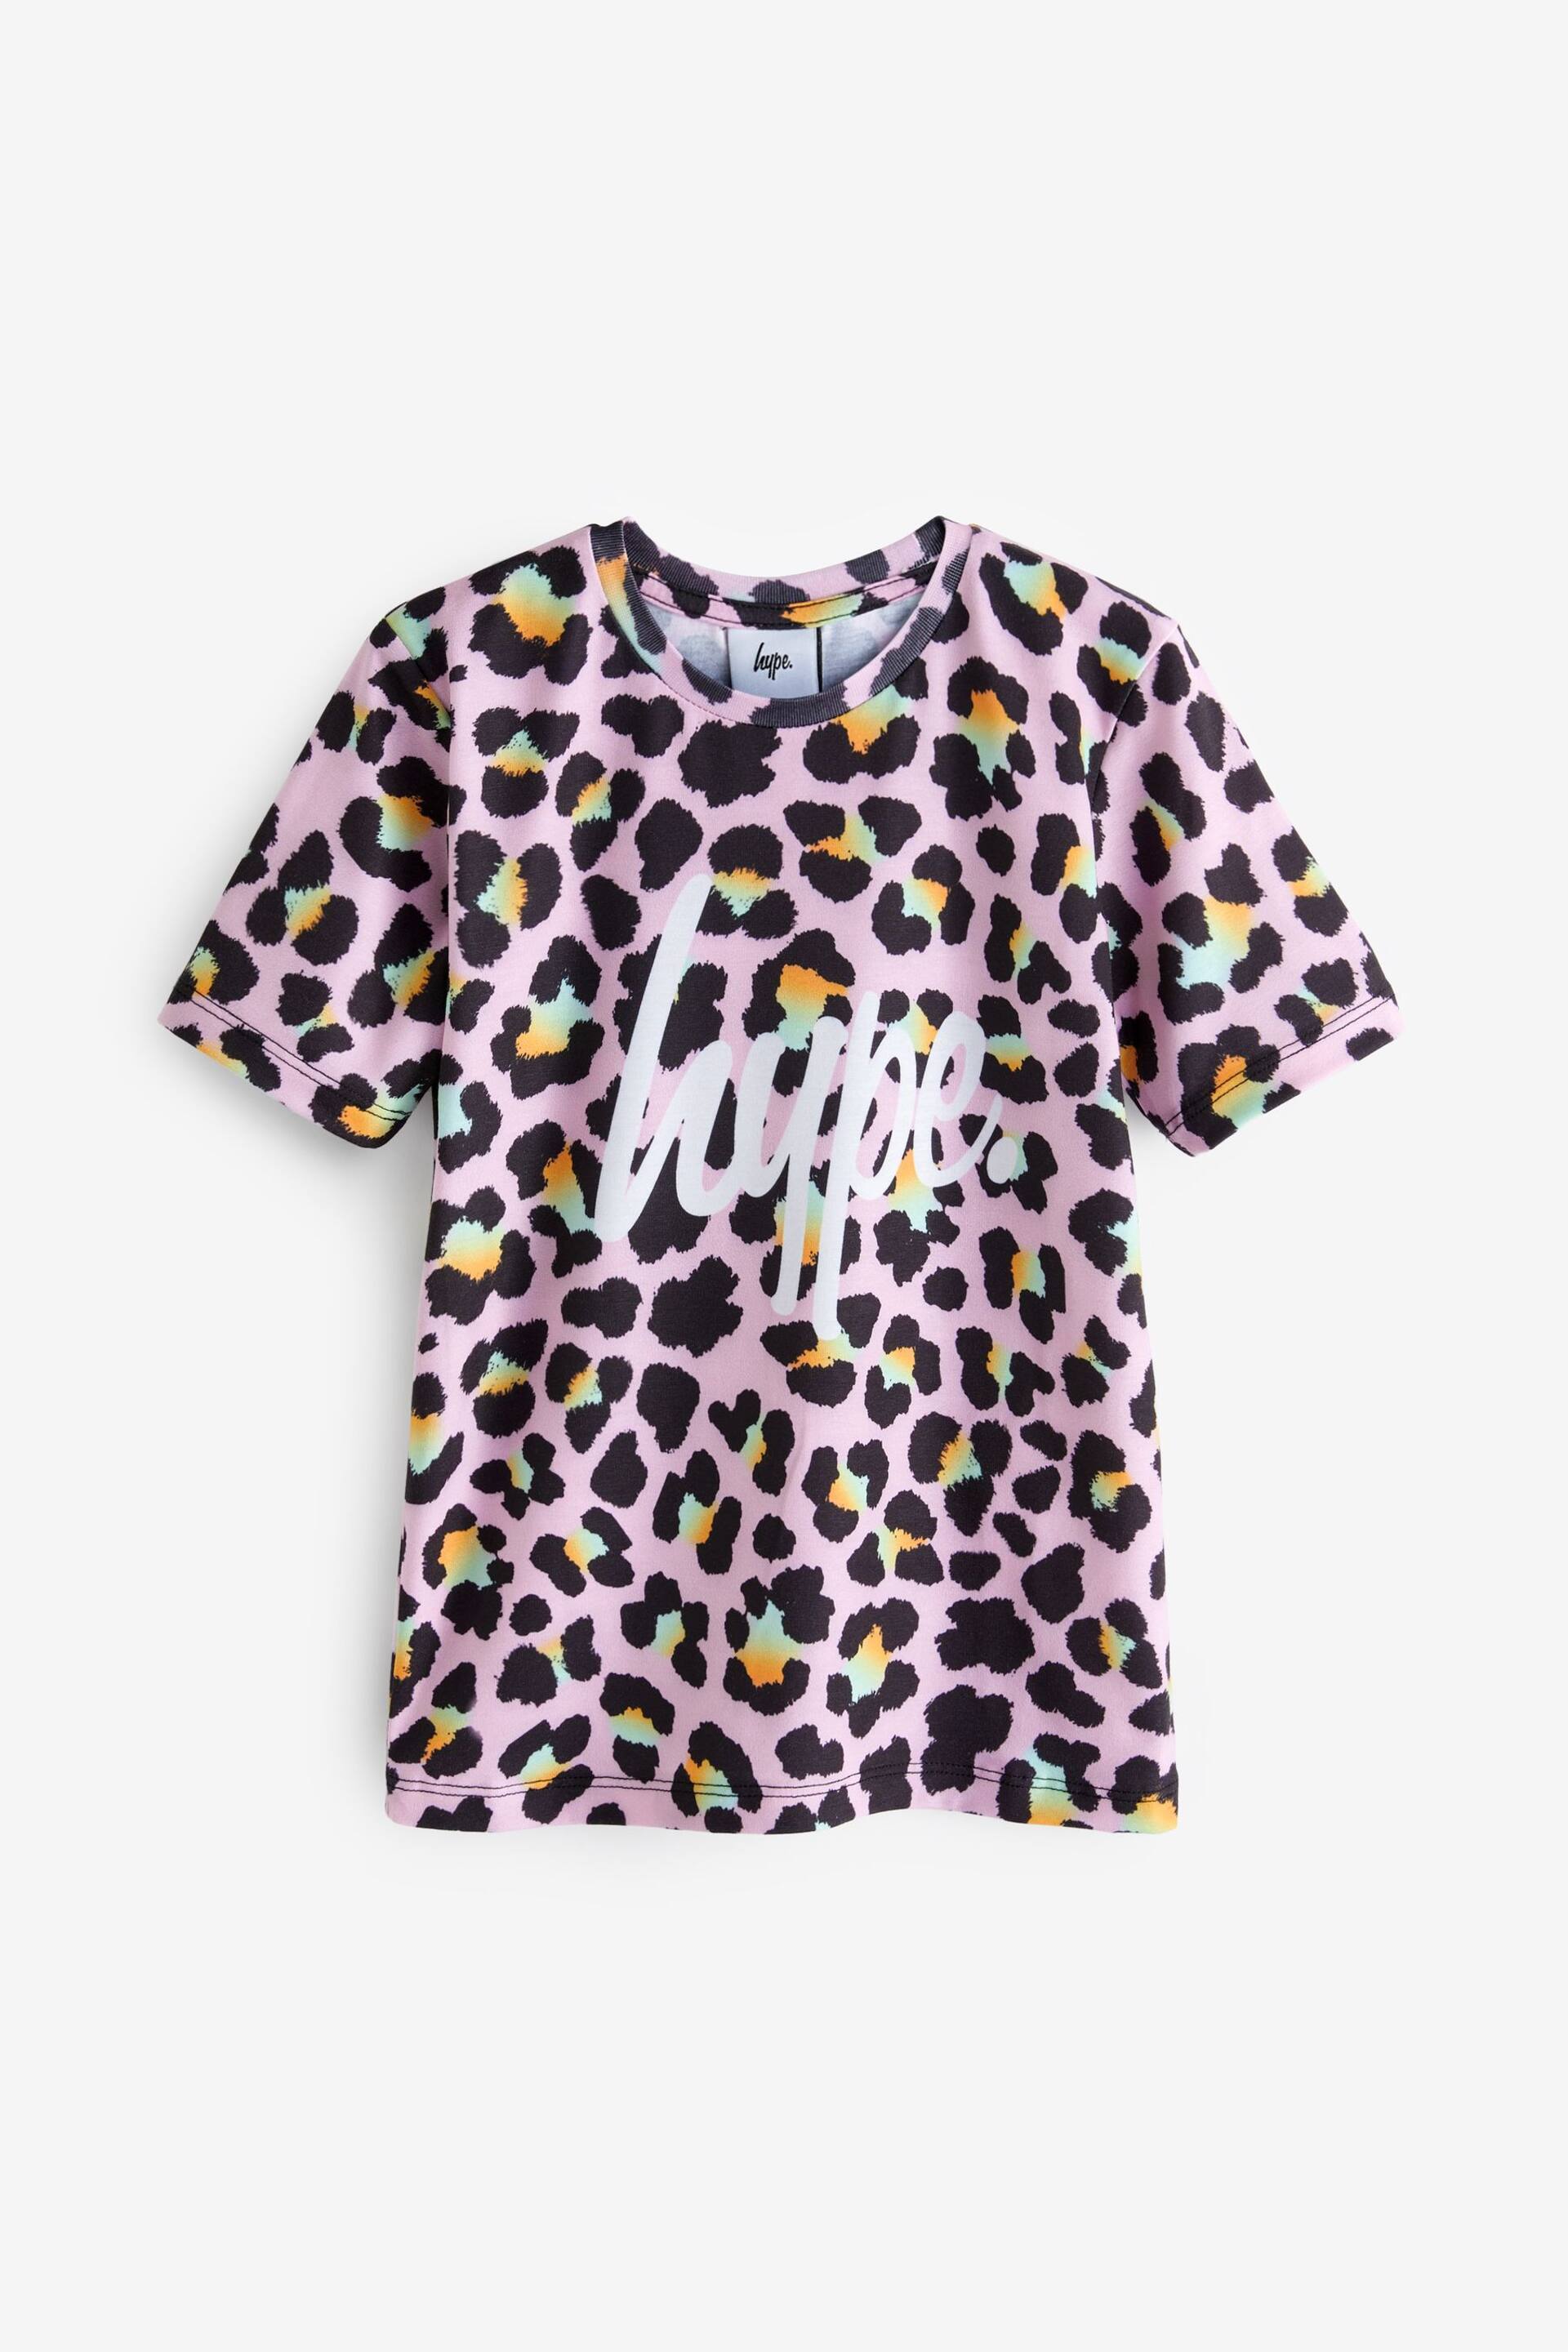 Hype Girls Multi Disco Leopard T-Shirt - Image 1 of 4